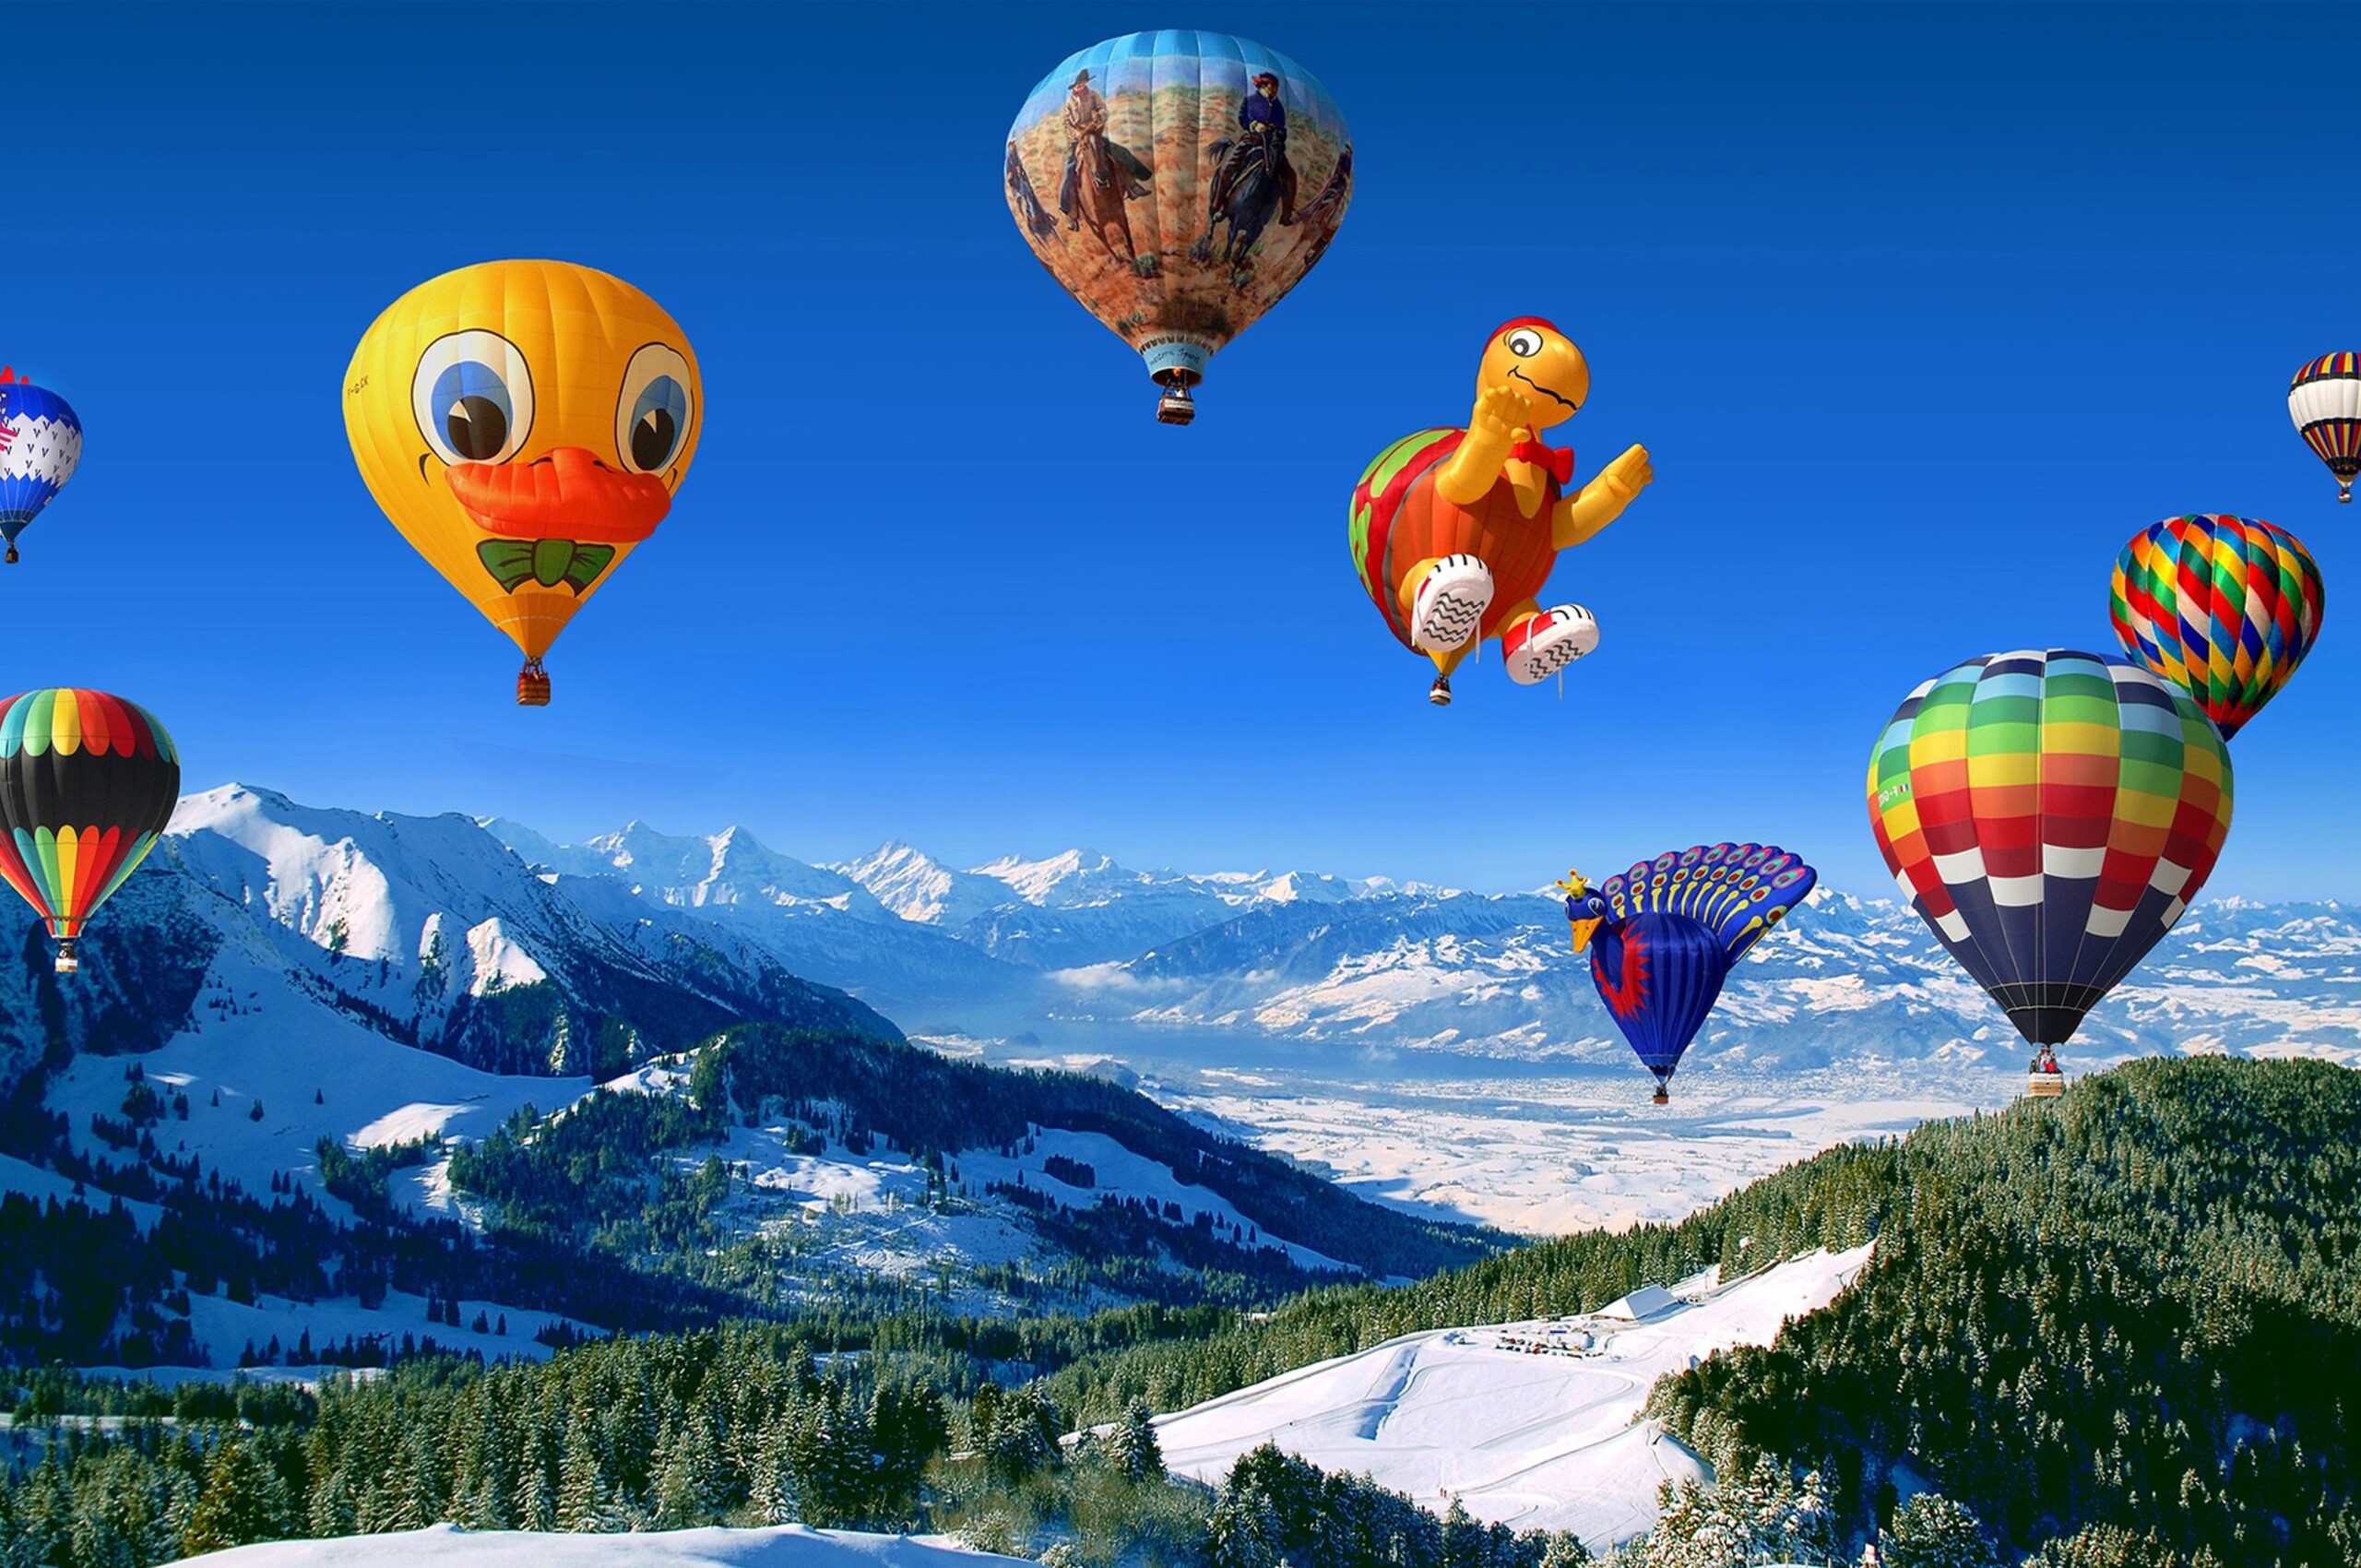 Телефон на воздушном шаре. Воздушный шар. Воздушные шары в небе. Воздушный шар полет. Воздушный шар с корзиной в небе.